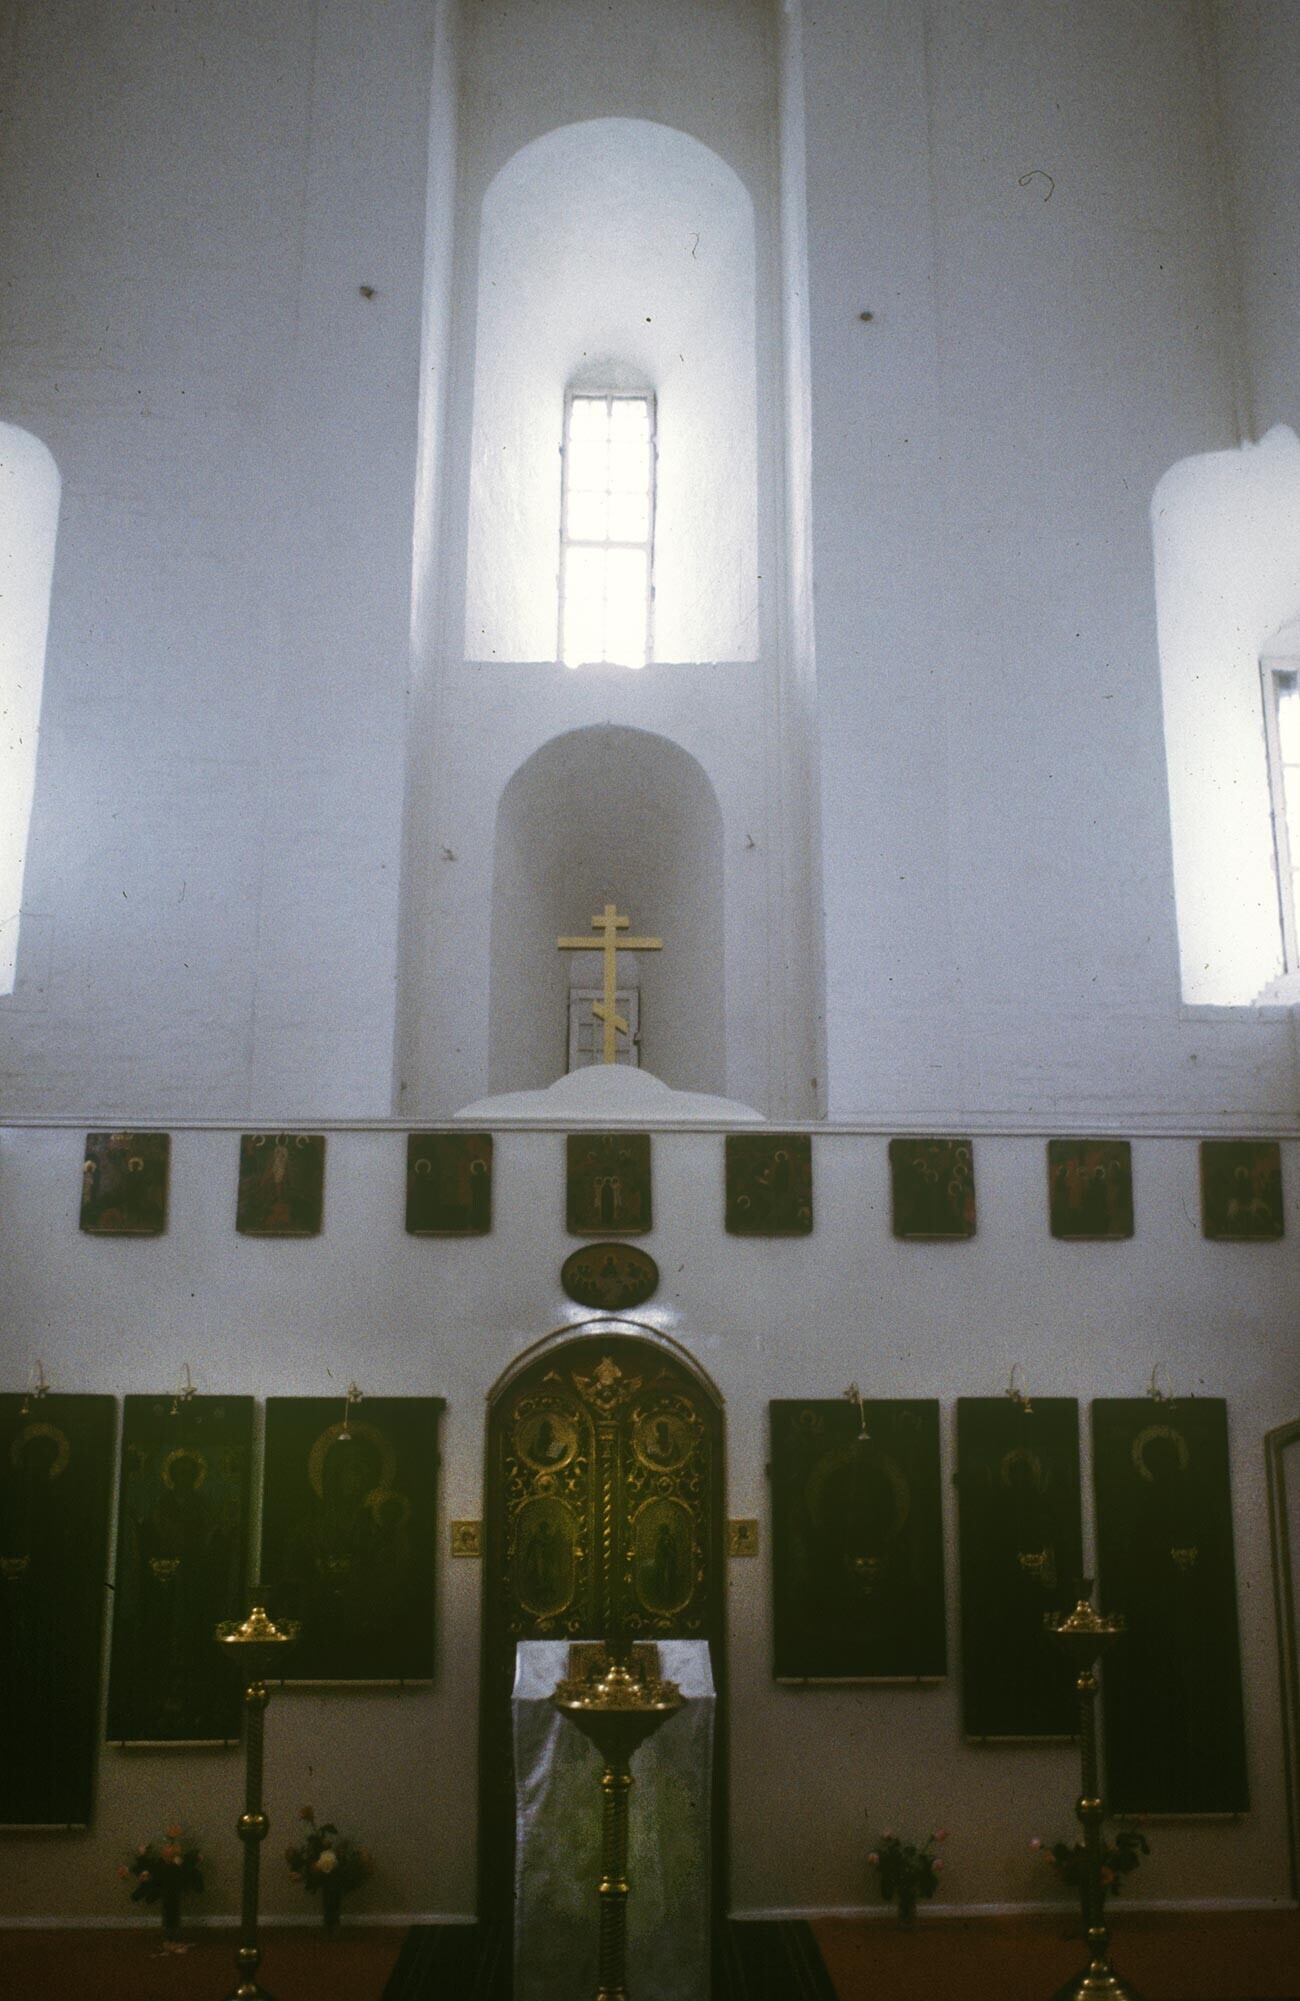 Gereja Kenaikan, interior. Layar ikon sementara di depan ceruk altar. 28 Mei 1999